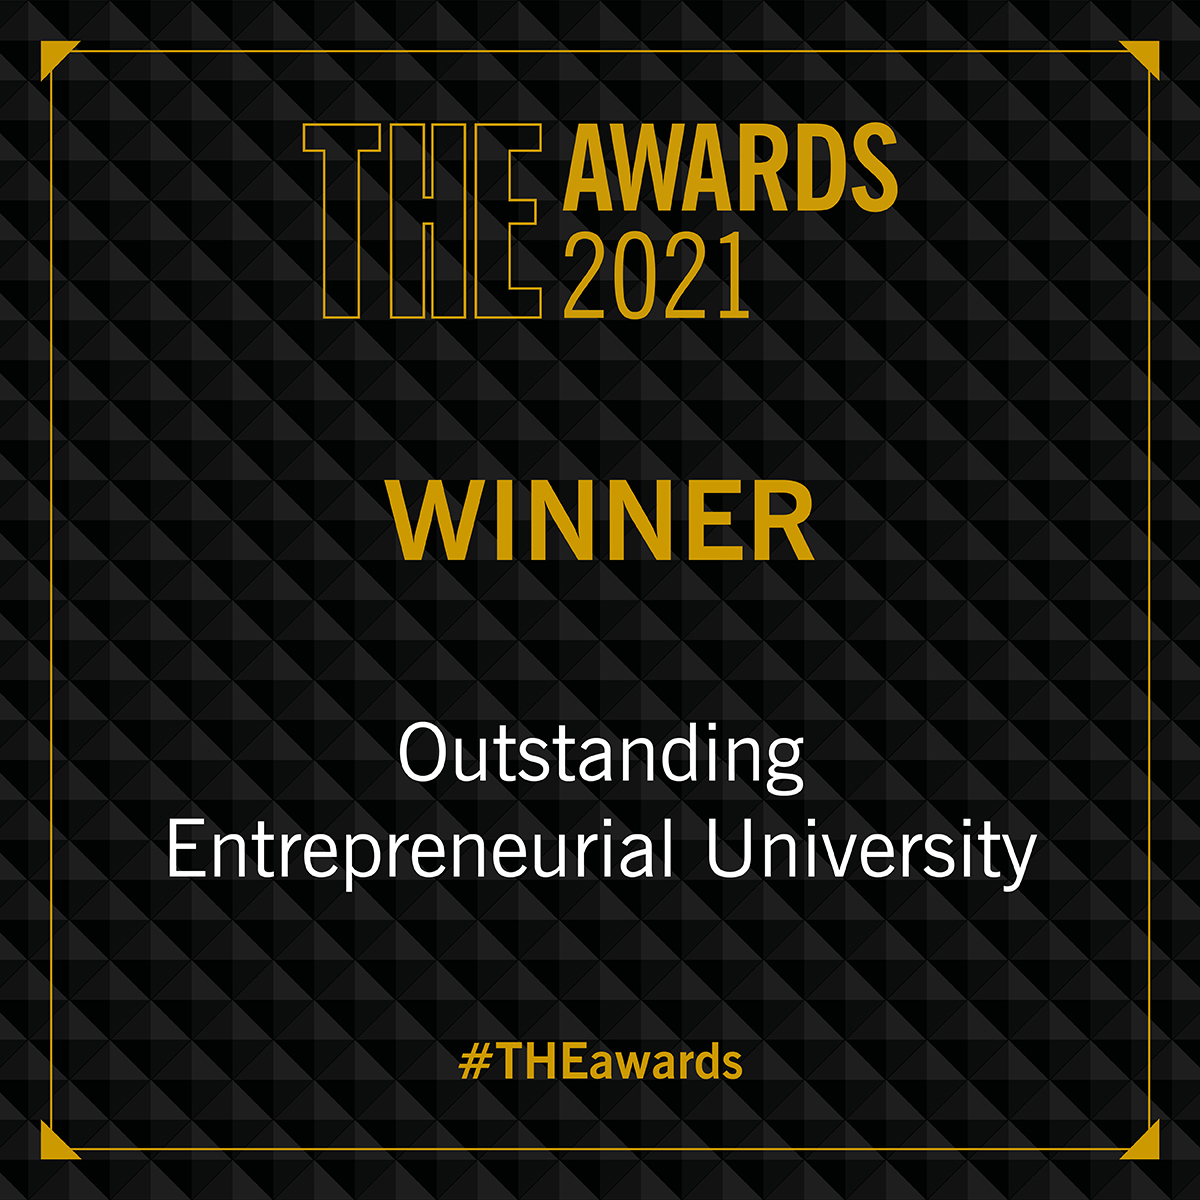 Image showing text Sheffield Hallam University Times Higher Education Awards 2021 winner for Outstanding Entrepreneurial University